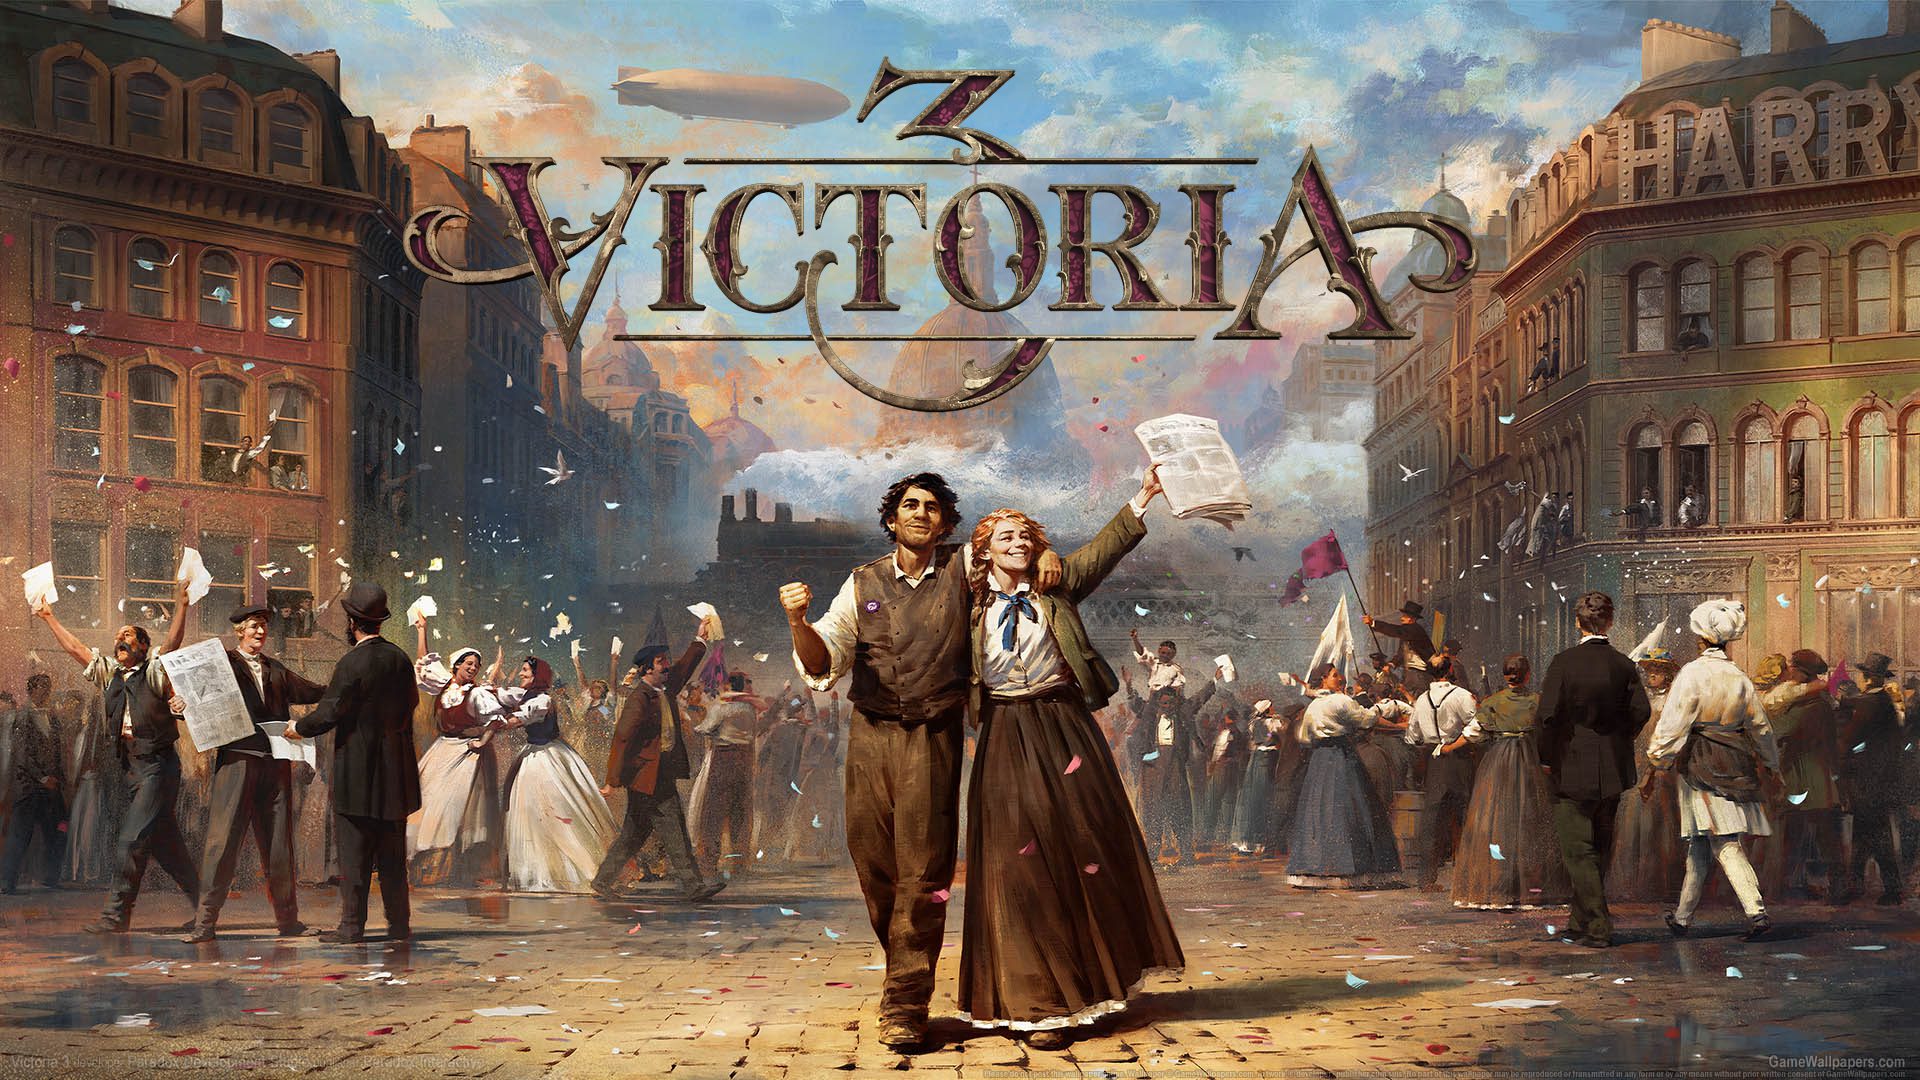 Victoria 3 covers